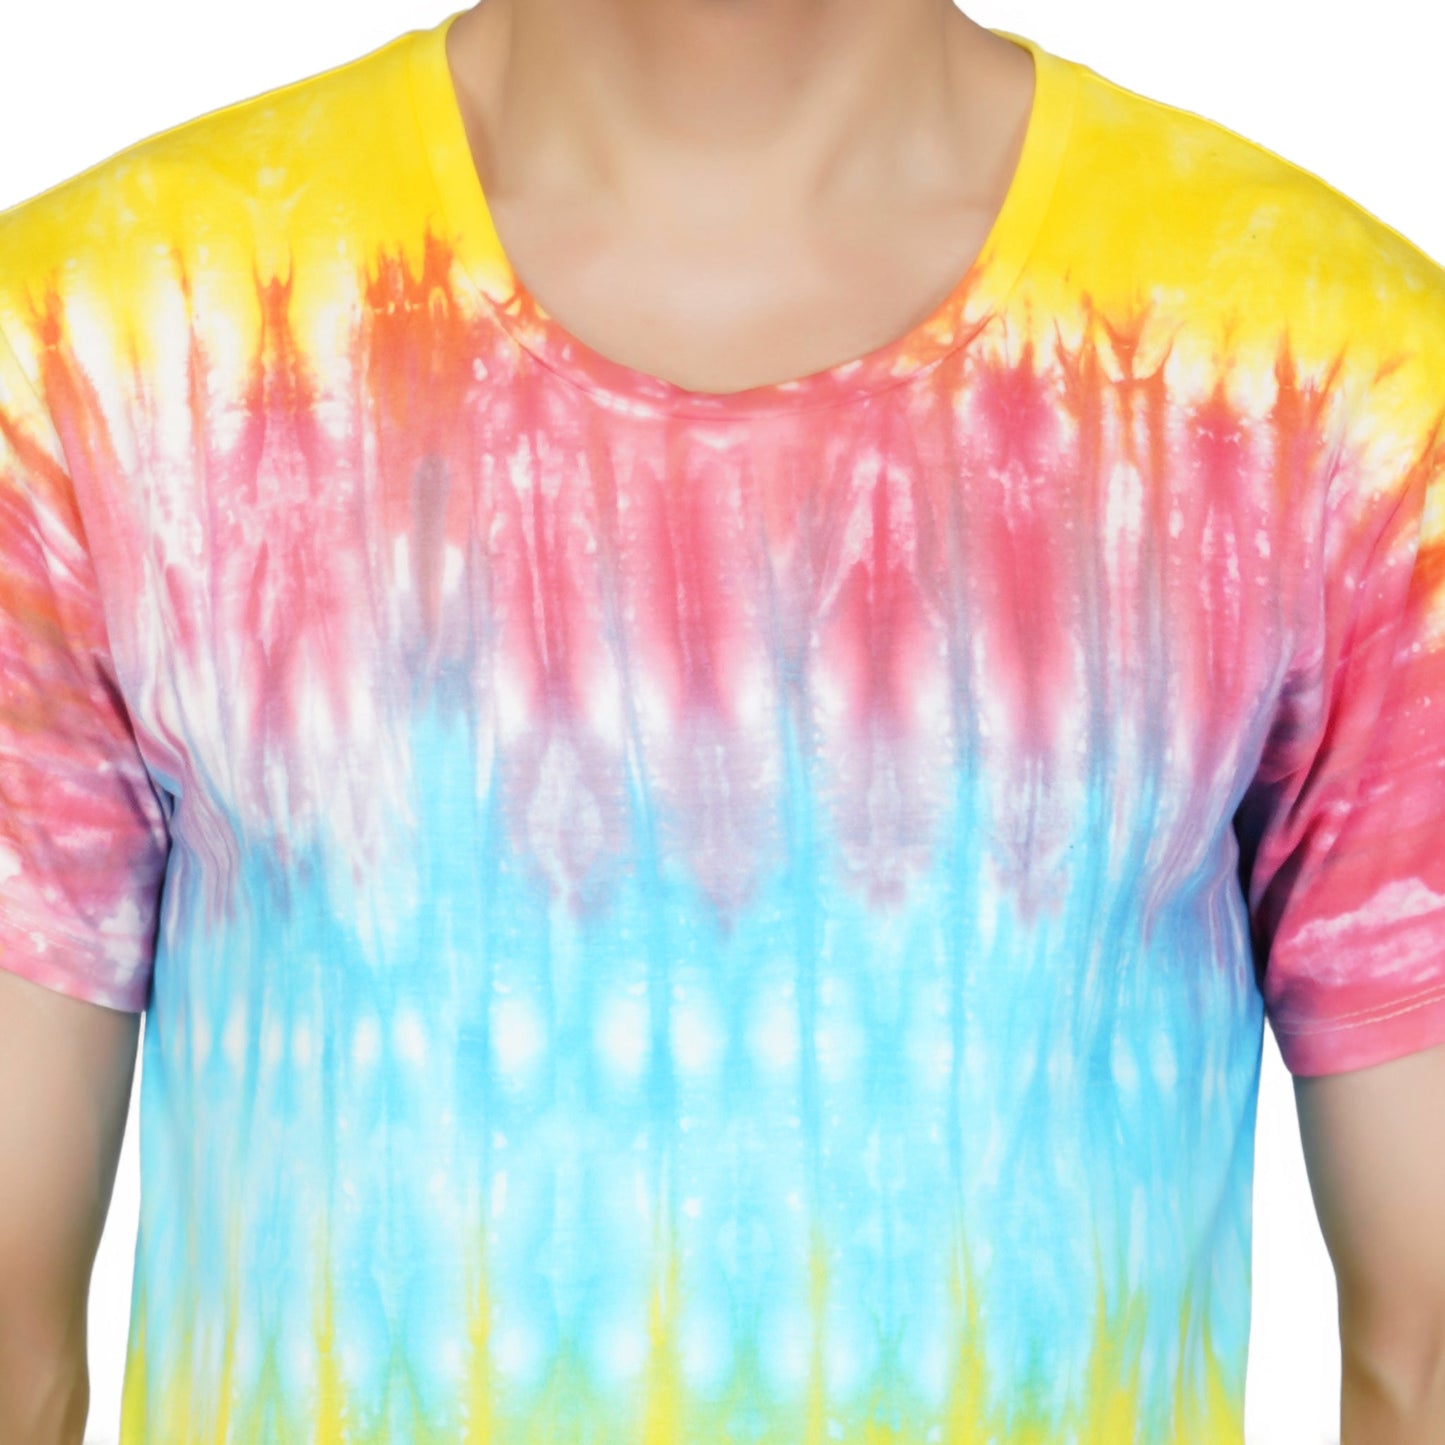 SLAY. Men's Rainbow Tie Dye T shirt